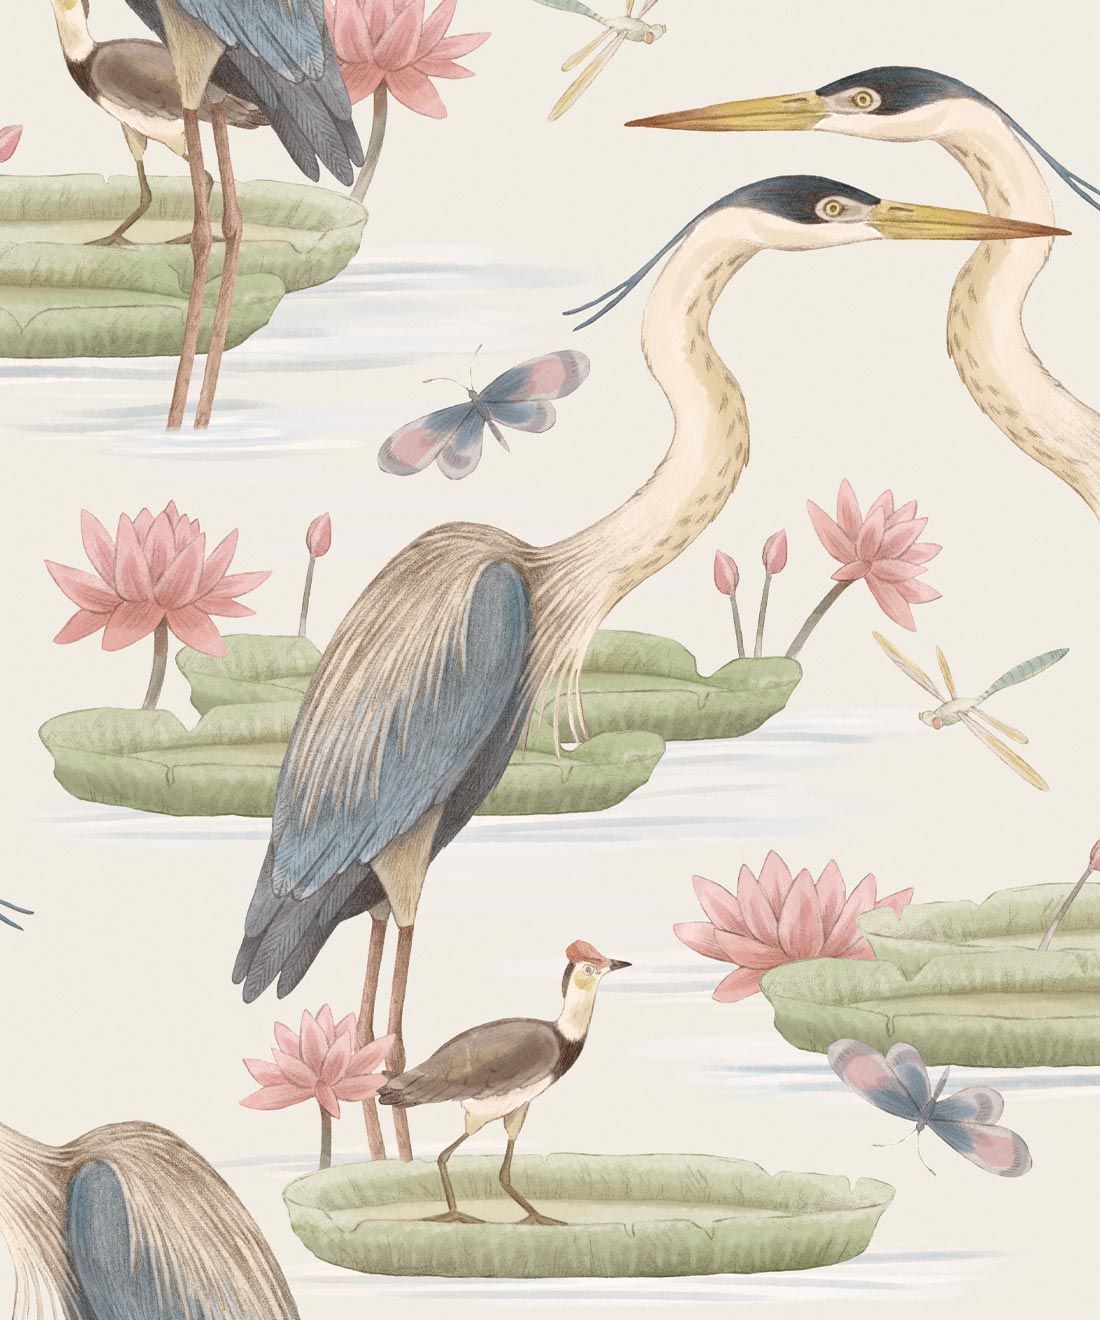 Heron, Jacana & Giant Lilypad Wallpaper